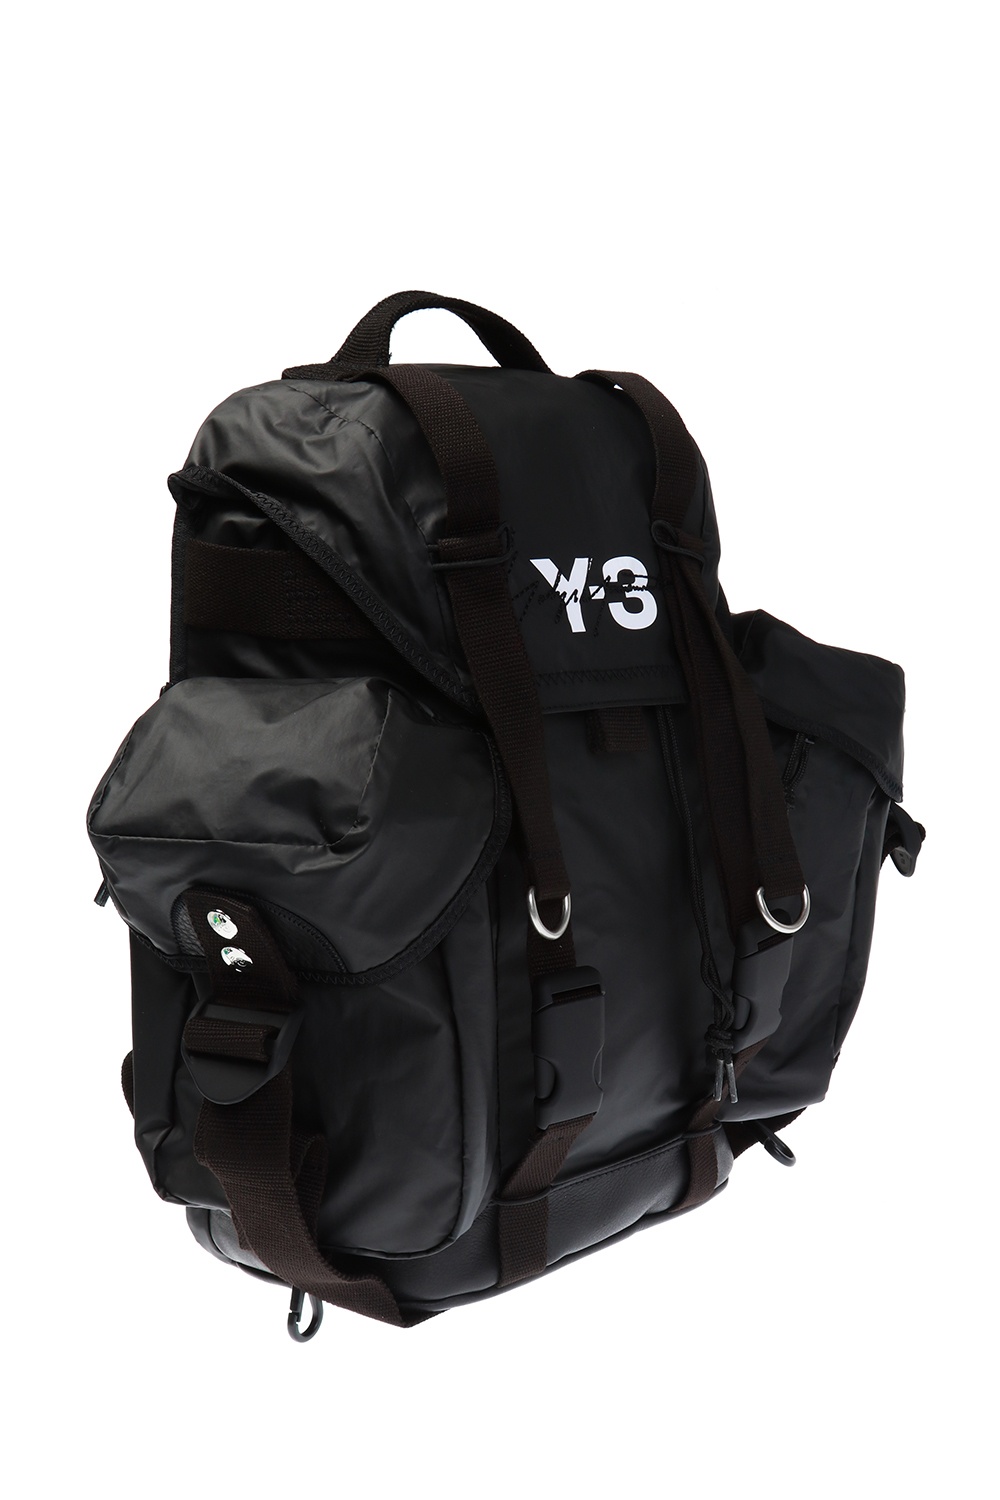 Black Logo backpack Y-3 Yohji Yamamoto - Vitkac France